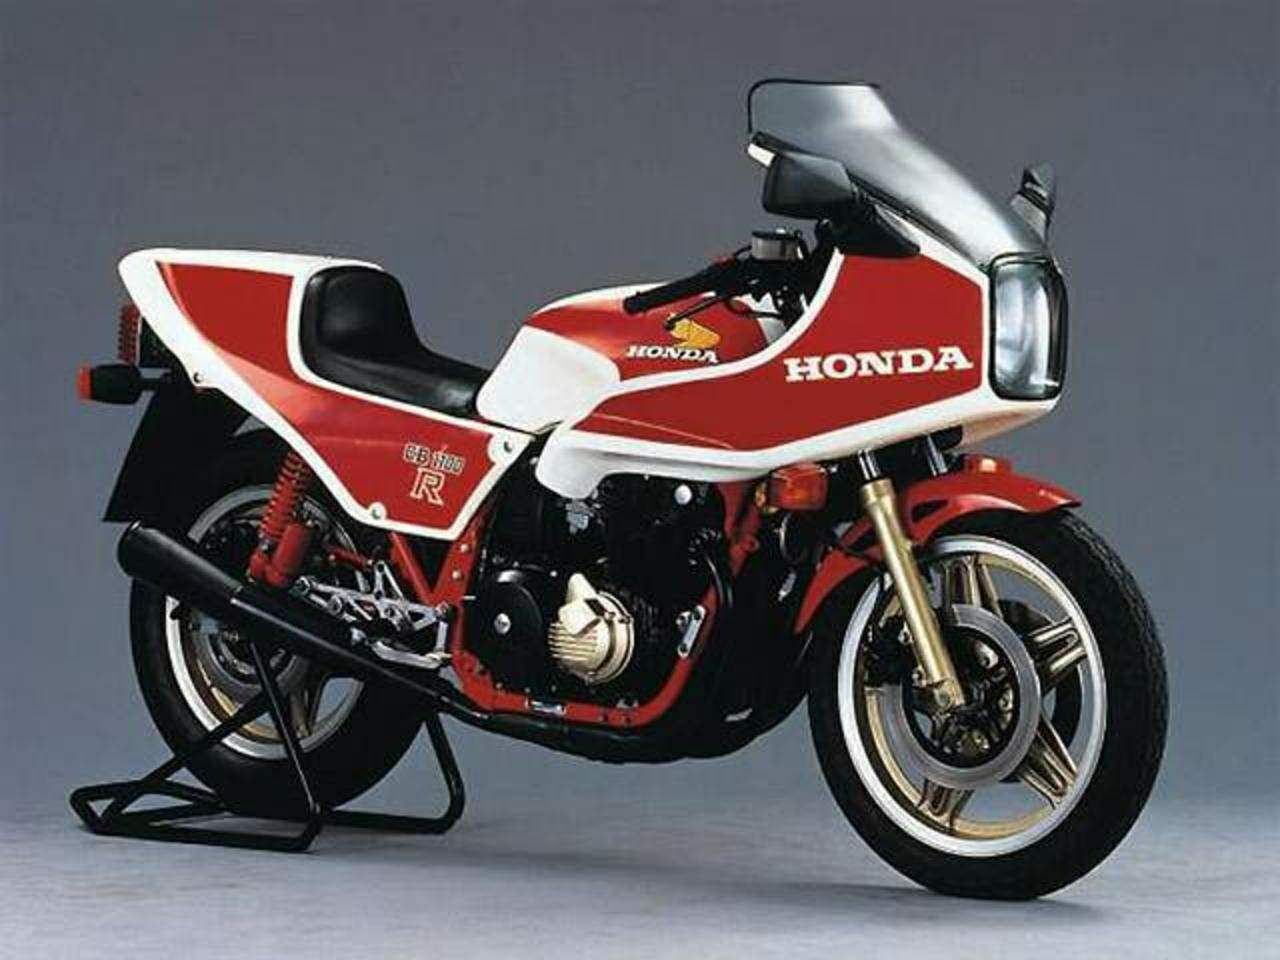 Foto studio Honda CB1100R